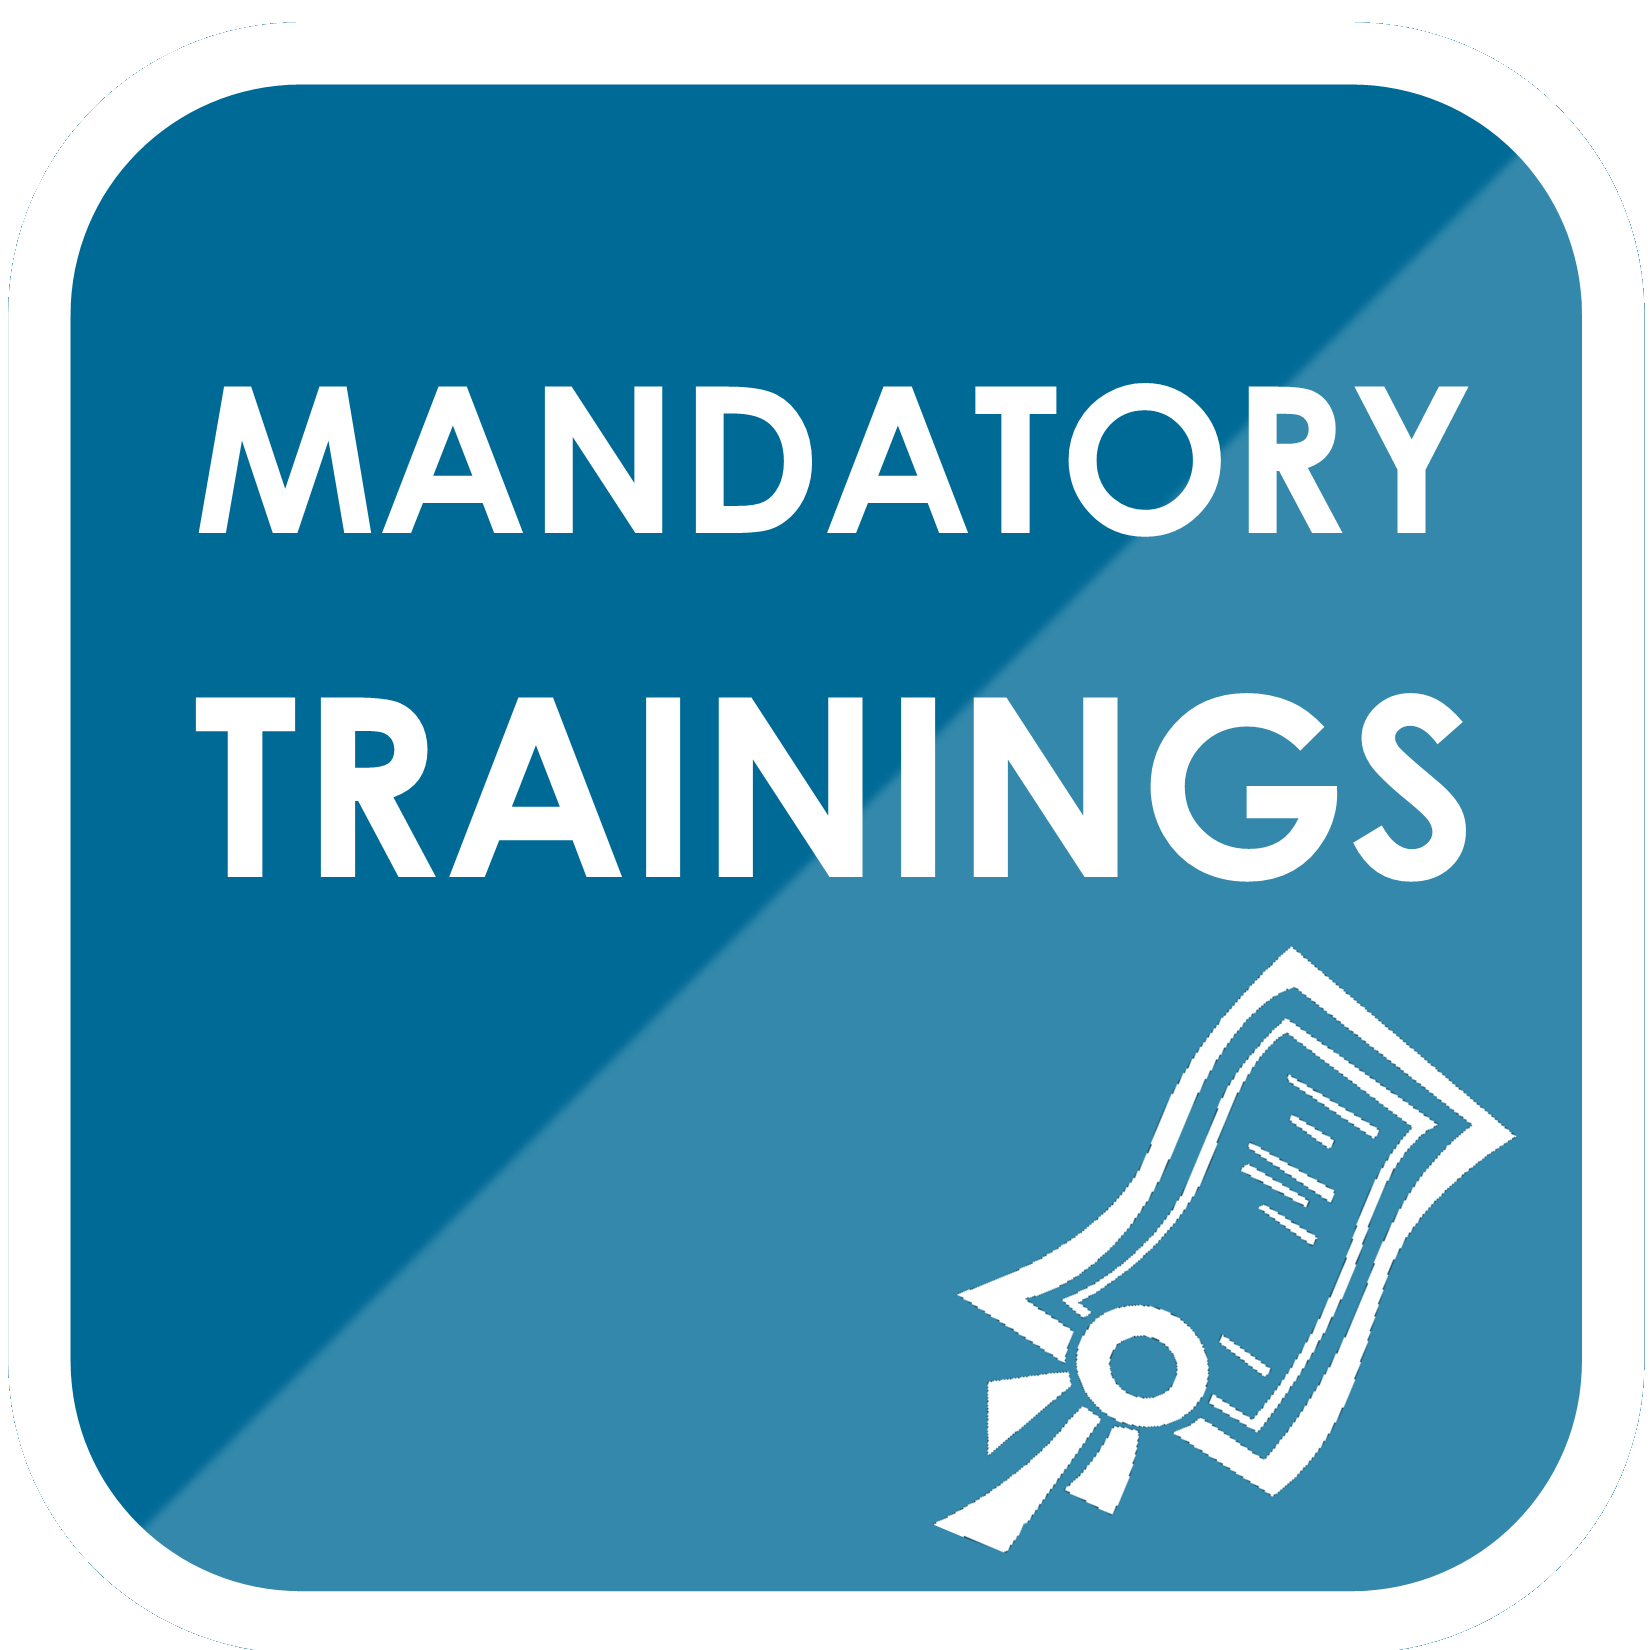 Mandatory Trainings